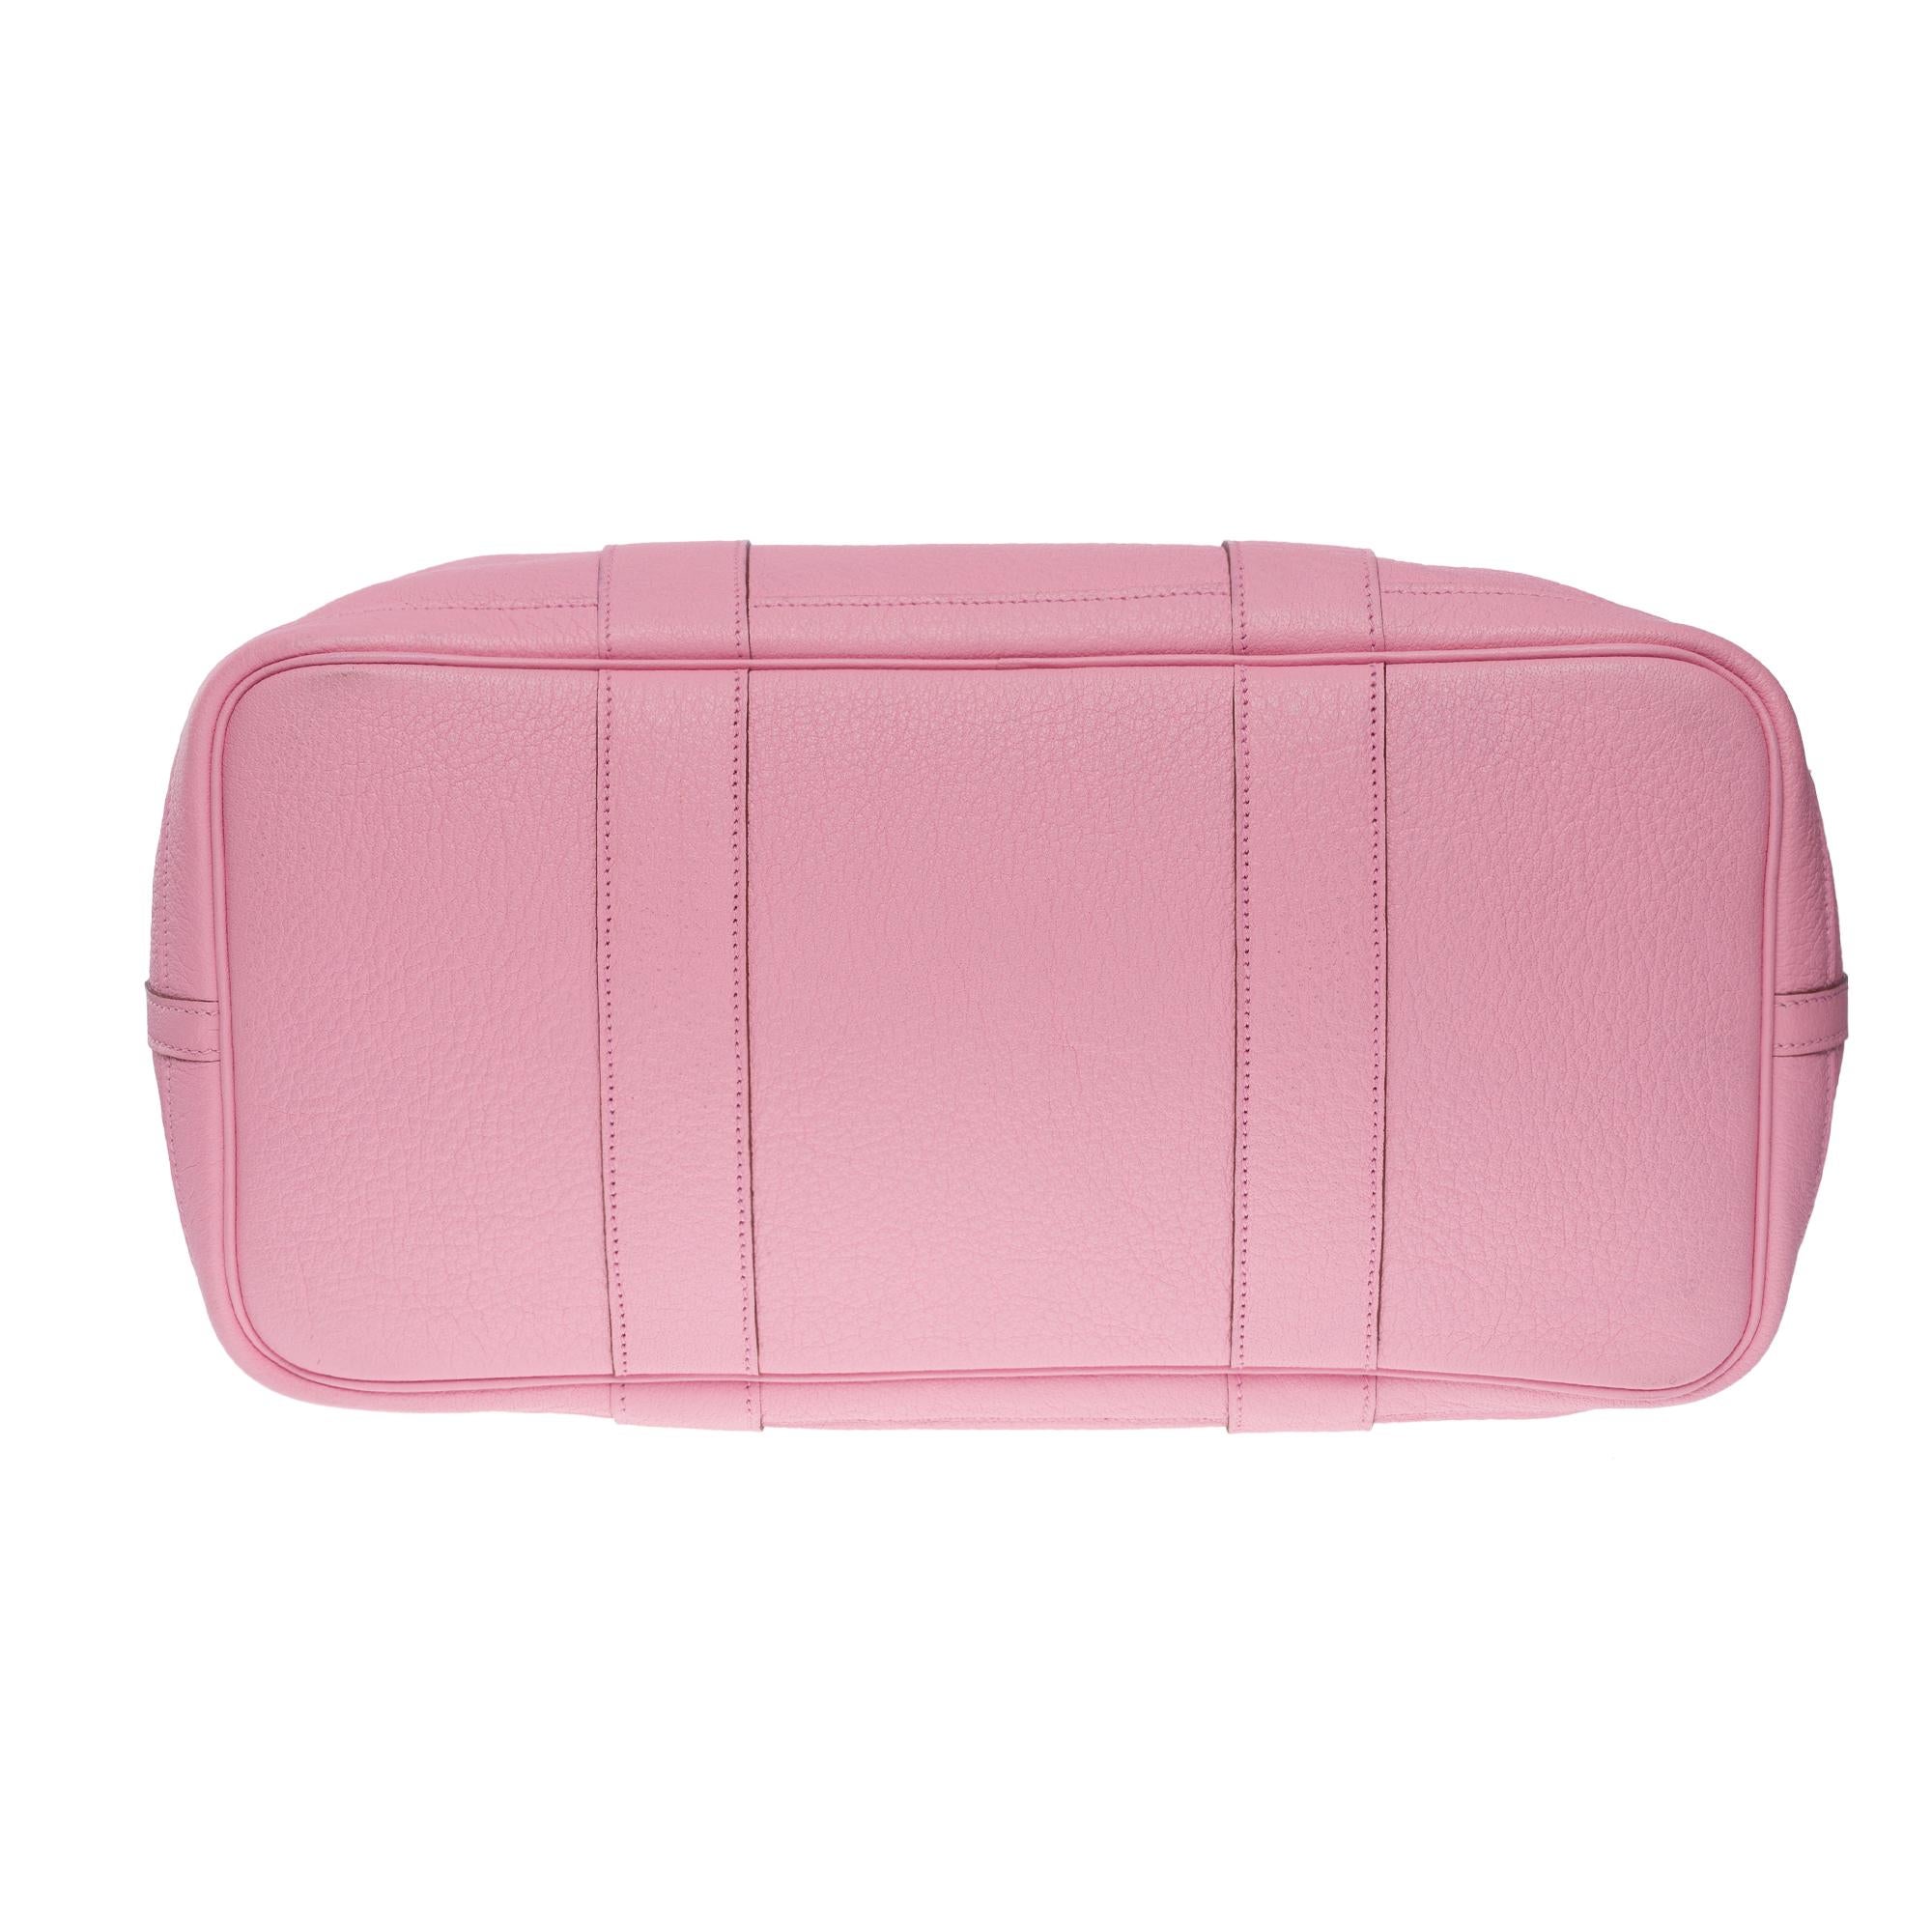 Gorgeous Hermès Garden Party 36 Tote bag in Sakura Pink Negonda leather, SHW 5